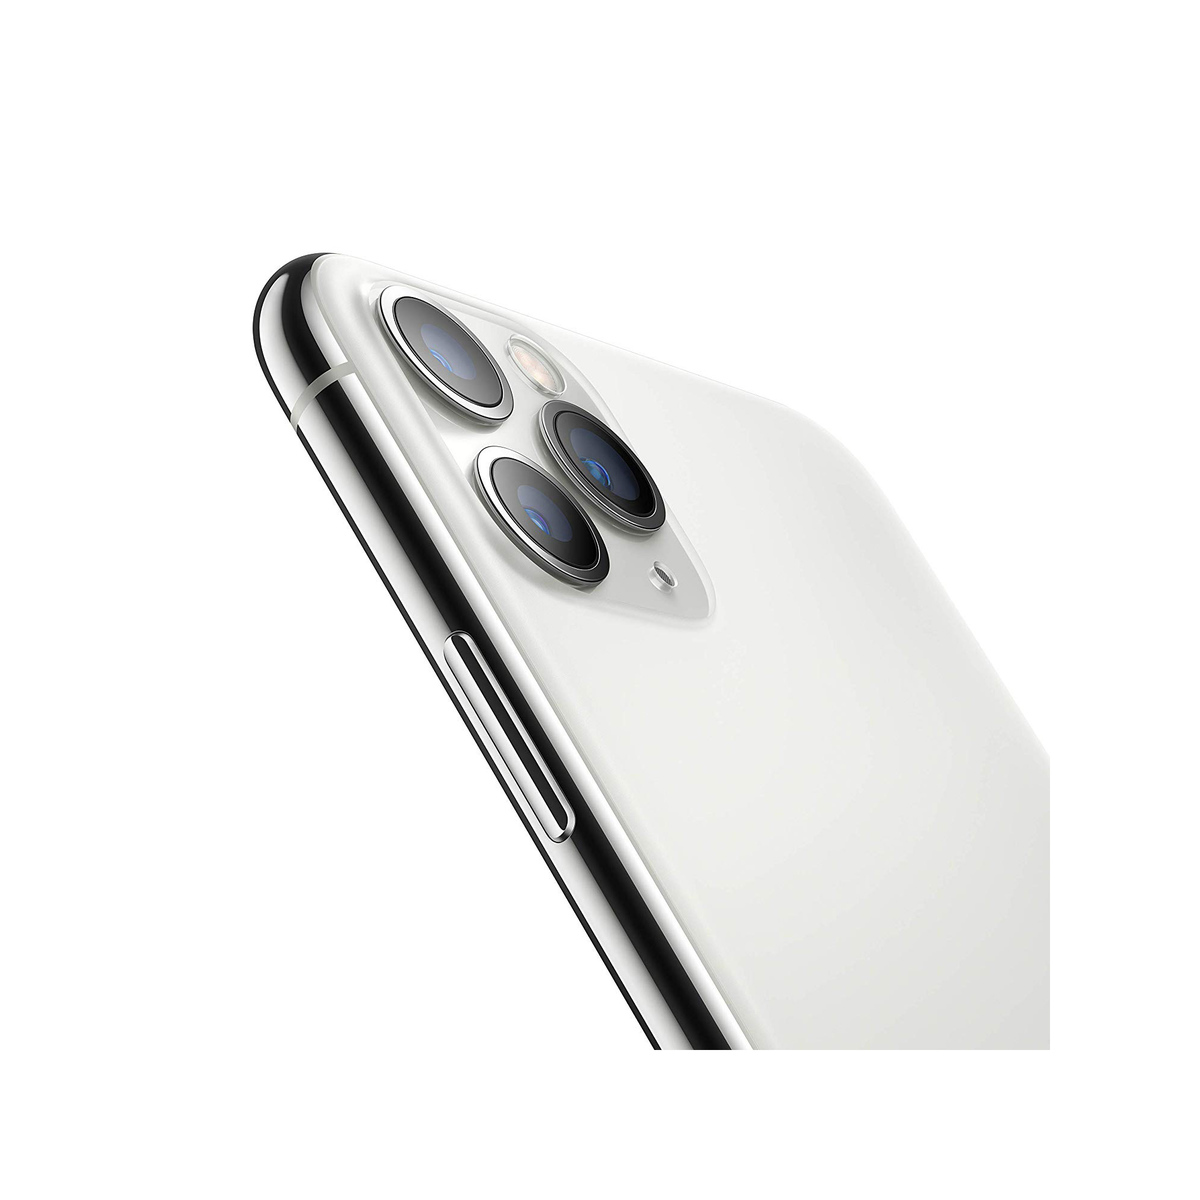 Apple Iphone 11 Pro 64gb Silver Smart Phones Lulu Ksa